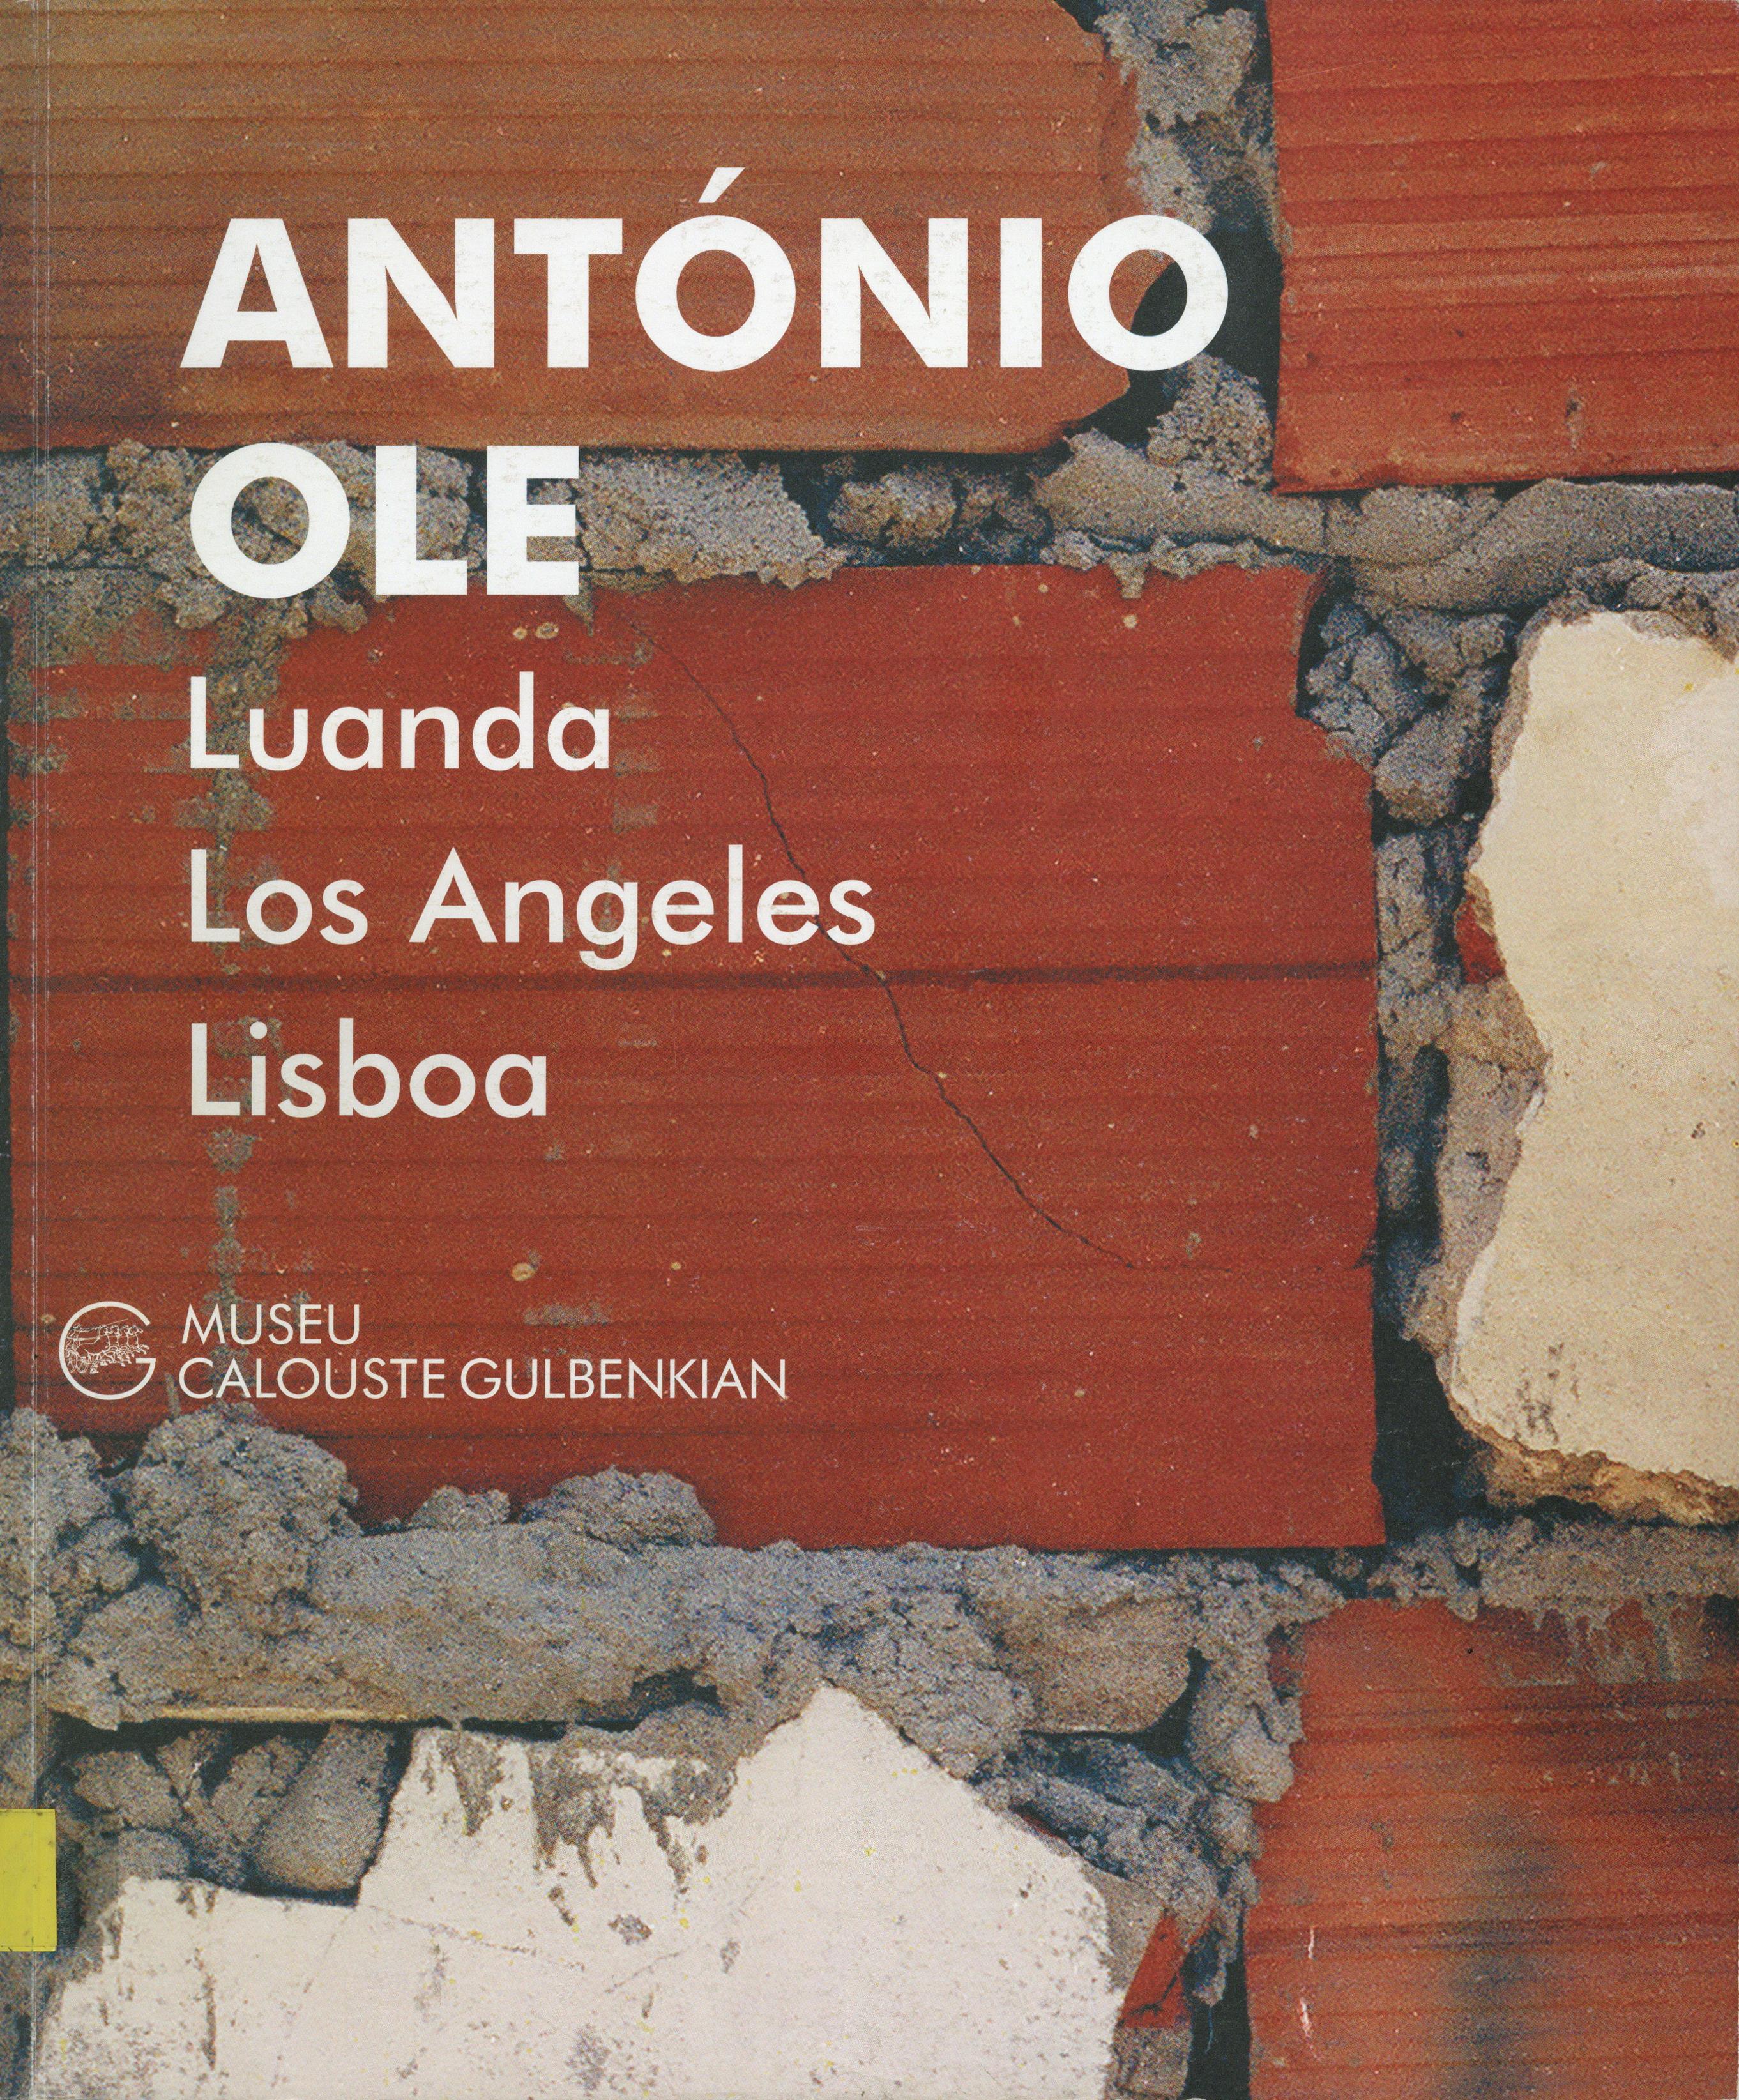 António Ole. Luanda, Los Angeles, Lisboa